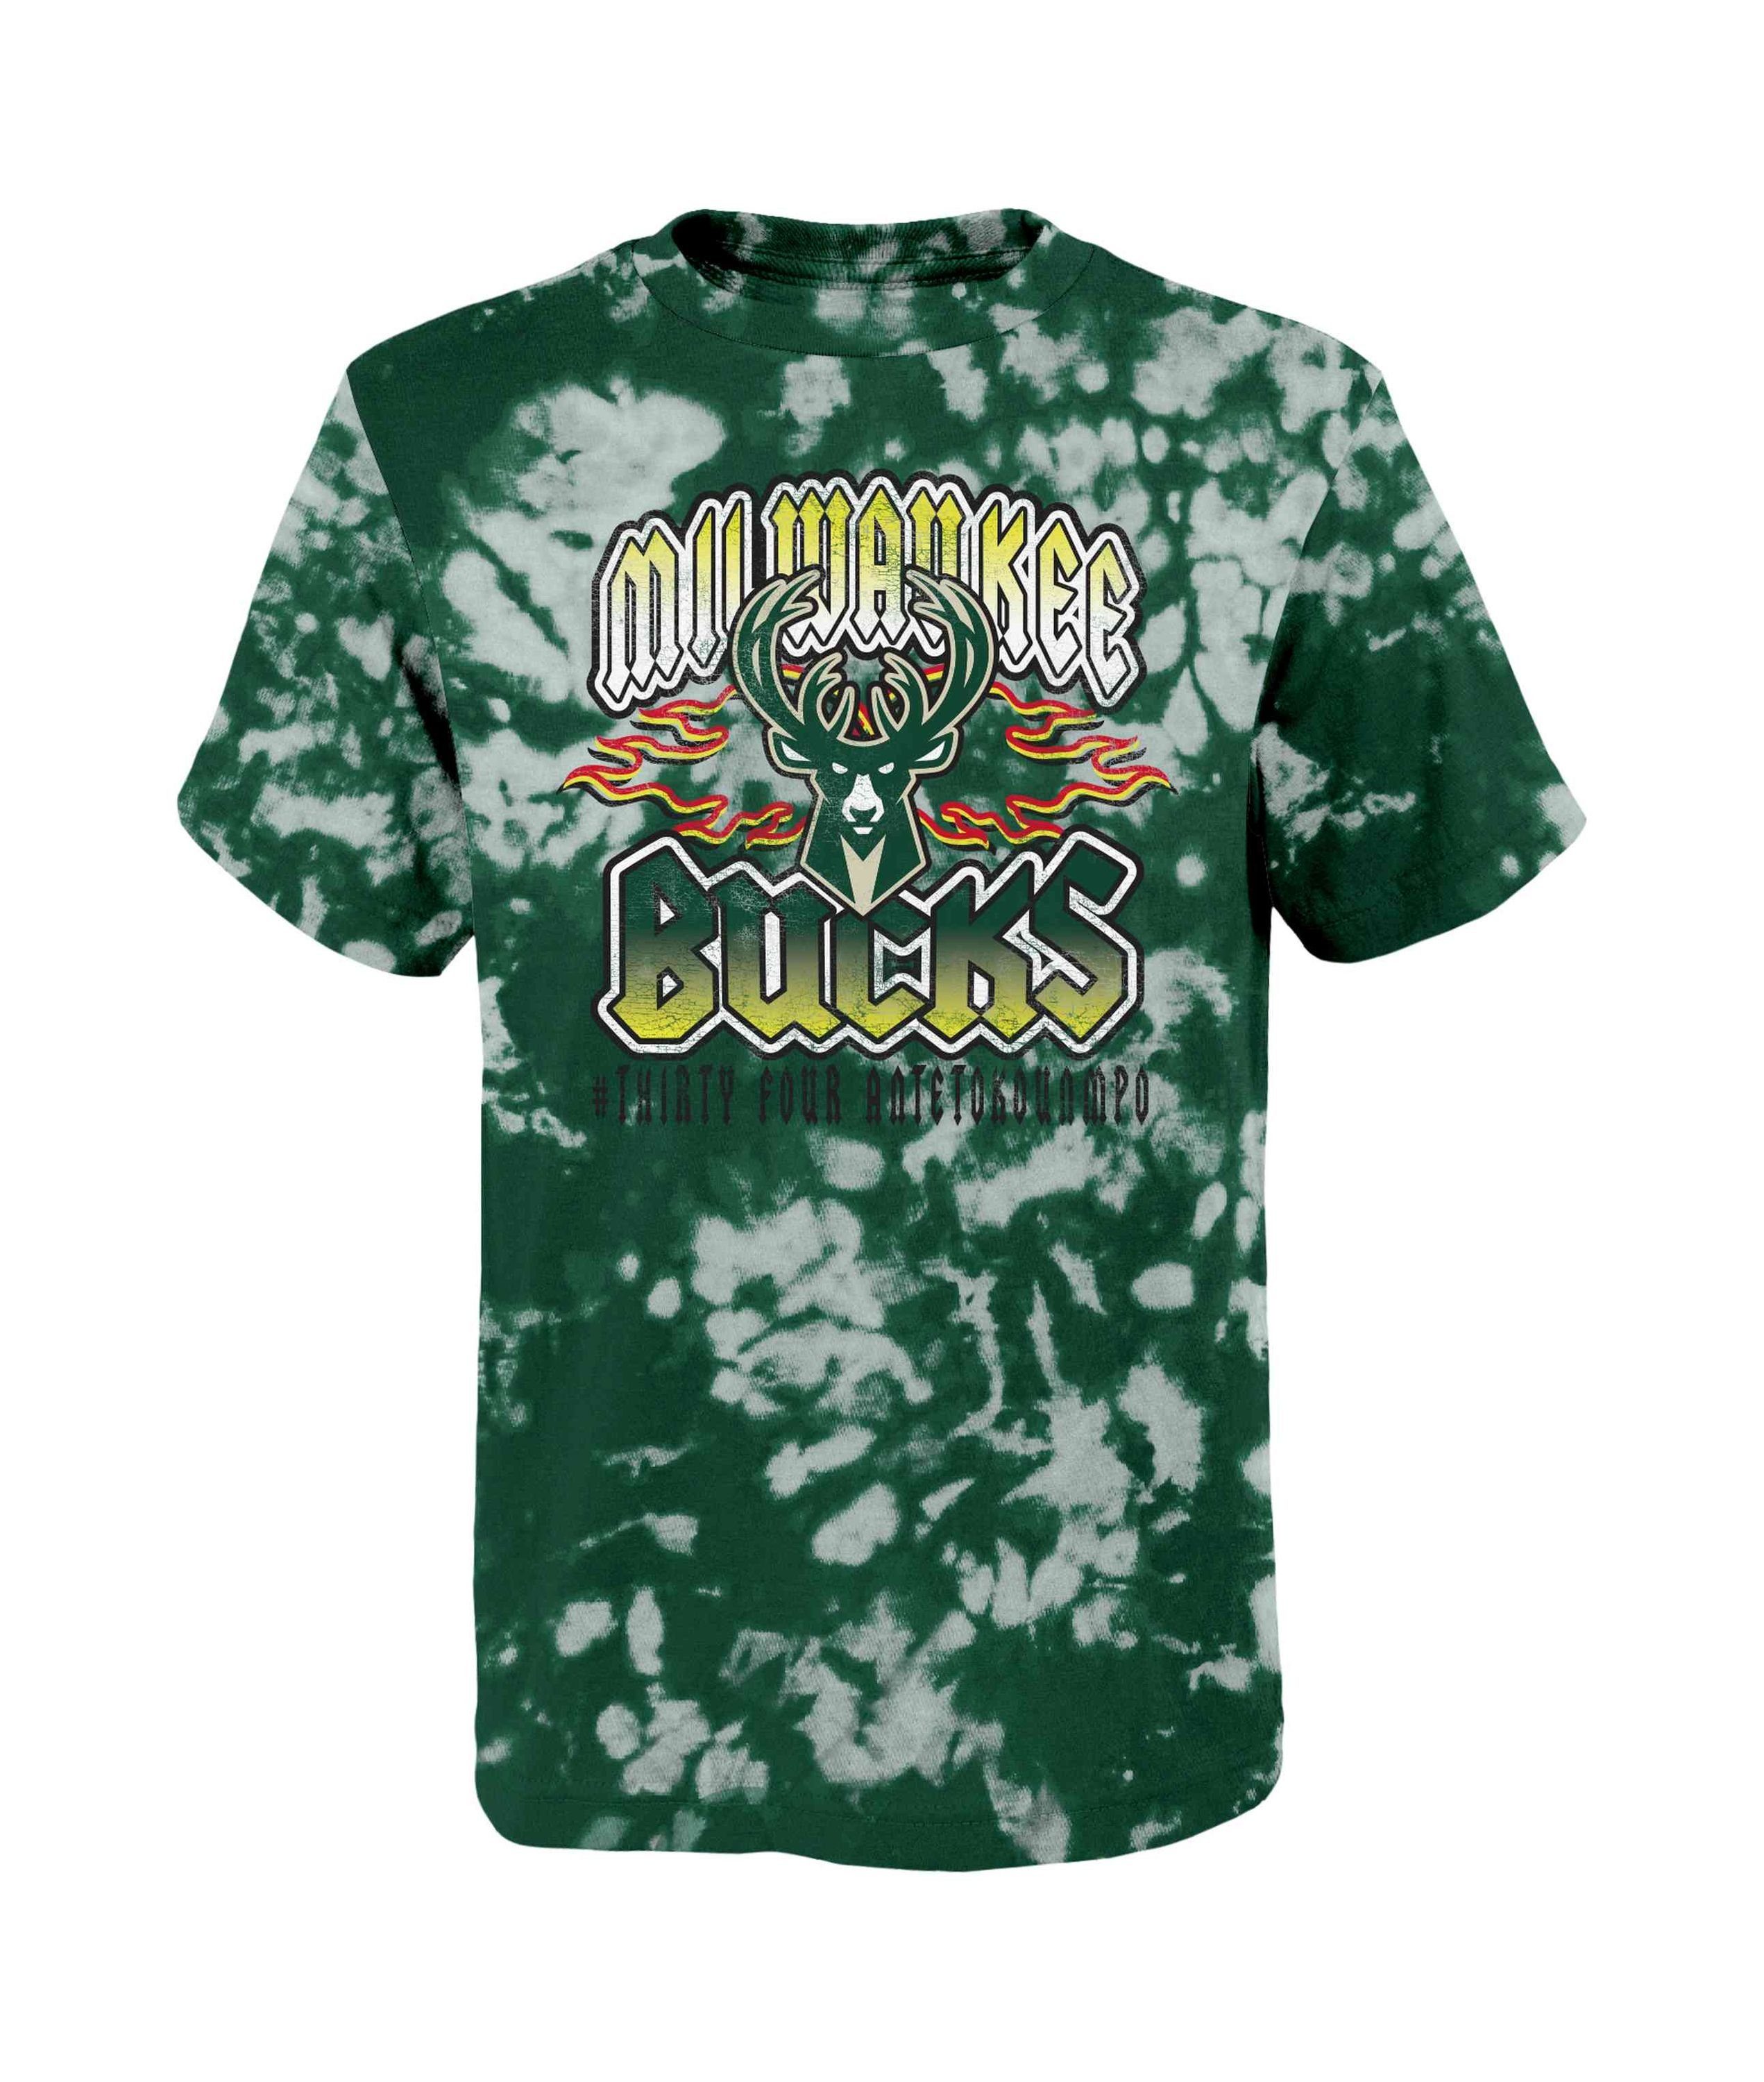 Rock Milwaukee T-Shirt Bucks School Outerstuff NBA Antetokounmpo of